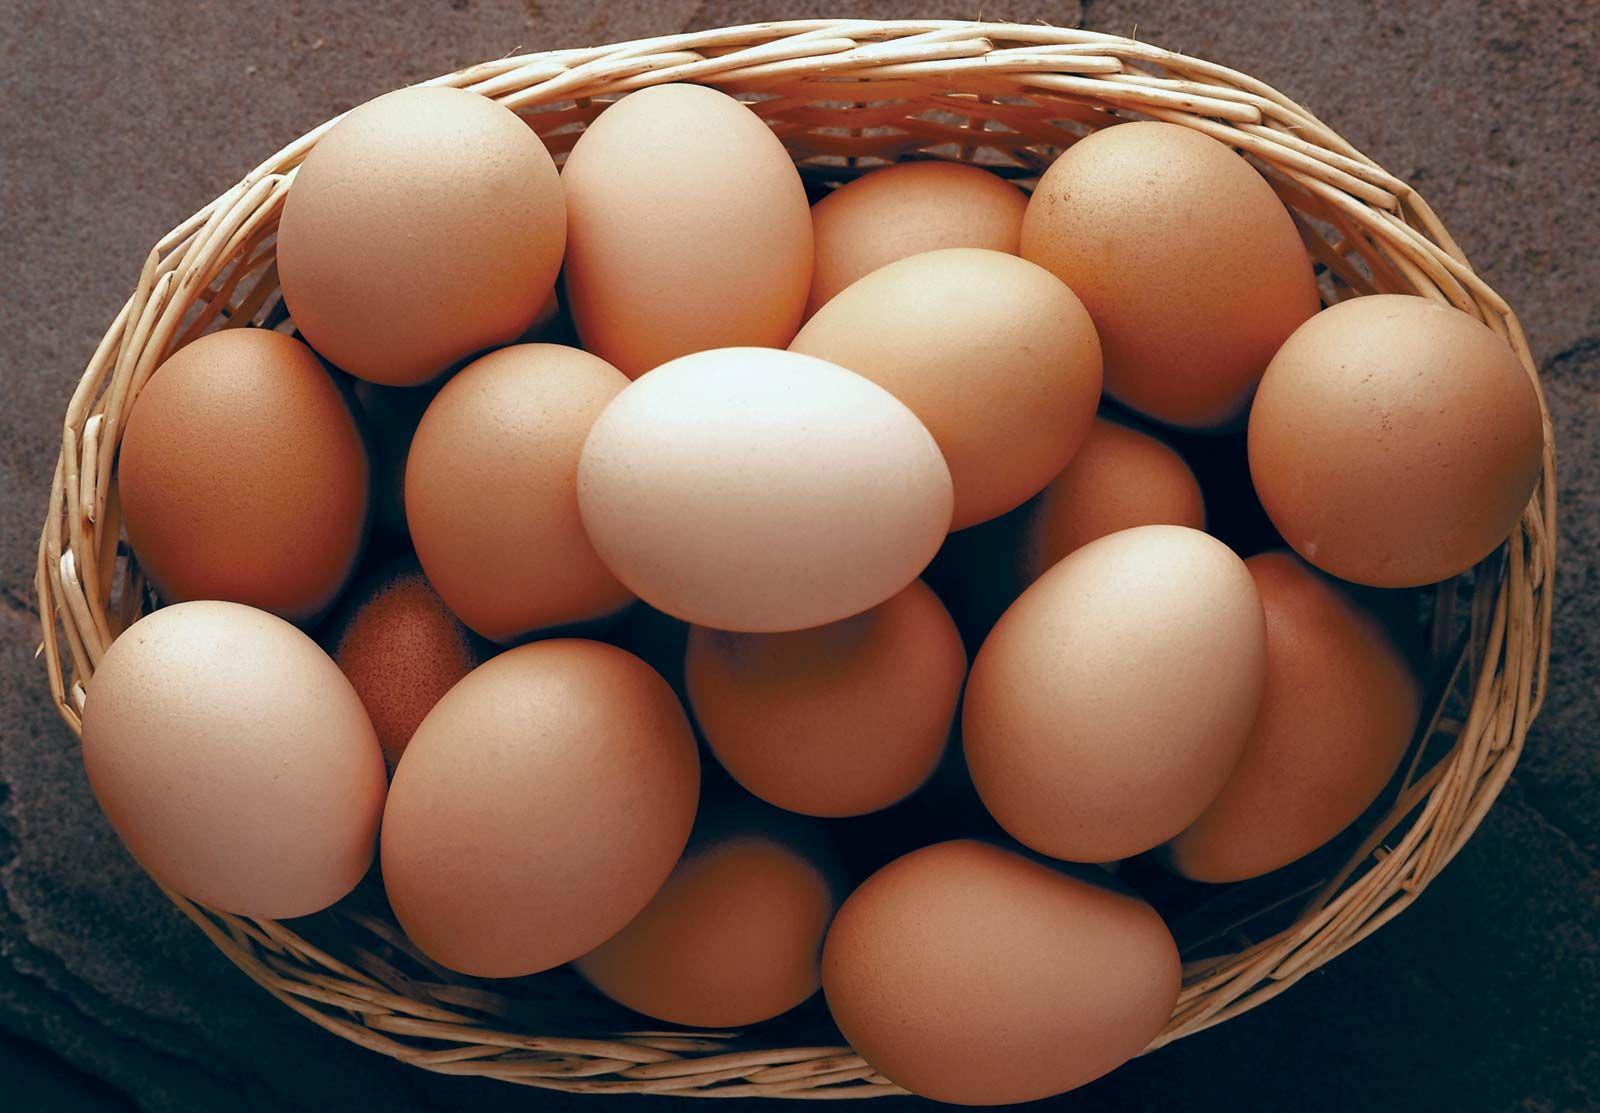 Egg | Definition, Characteristics, & Nutritional Content ...